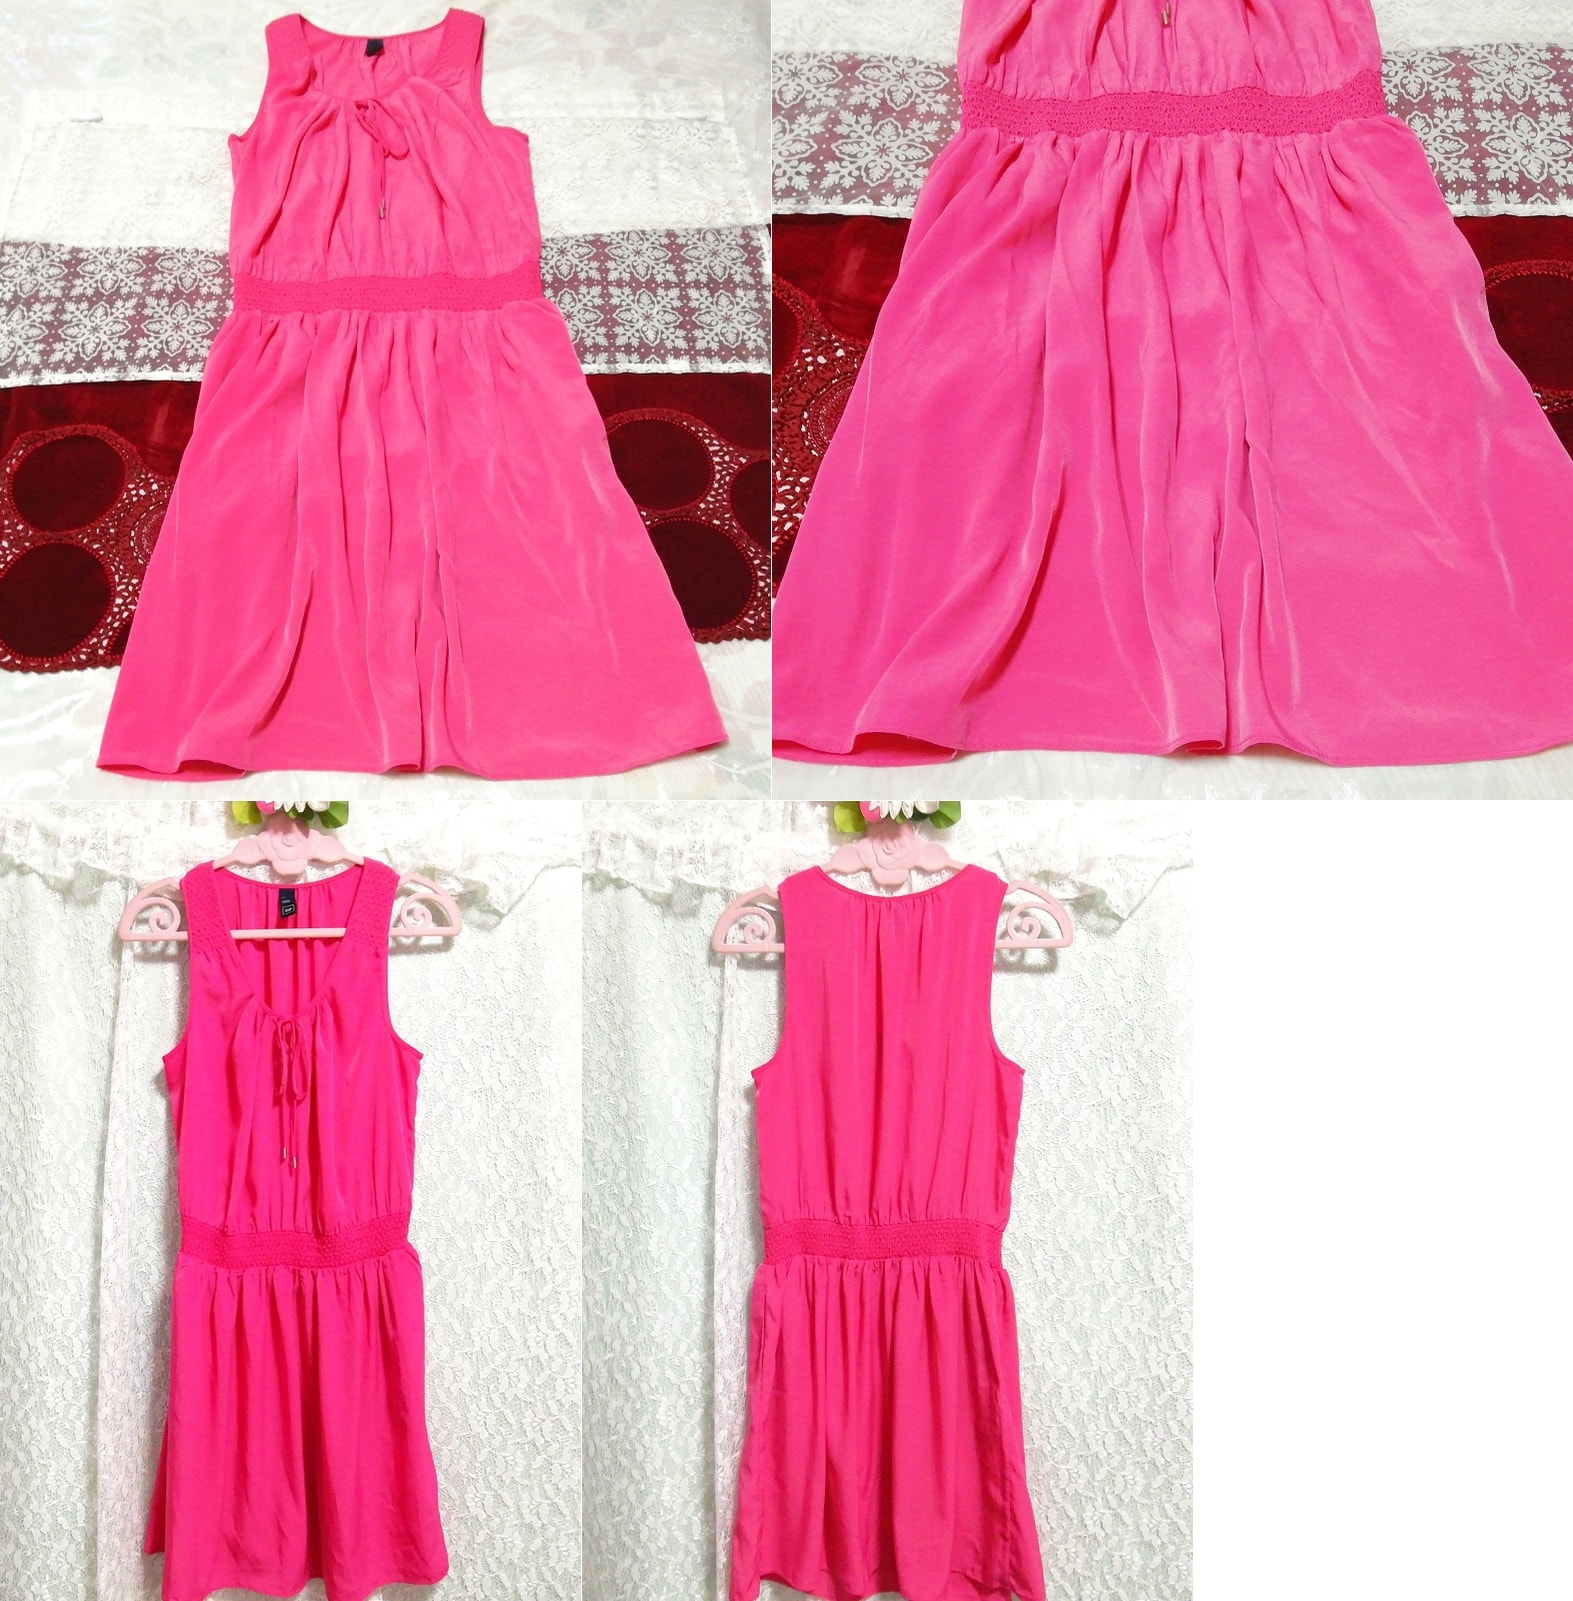 Fluorescent pink chiffon sleeveless negligee nightgown half dress, knee length skirt, m size